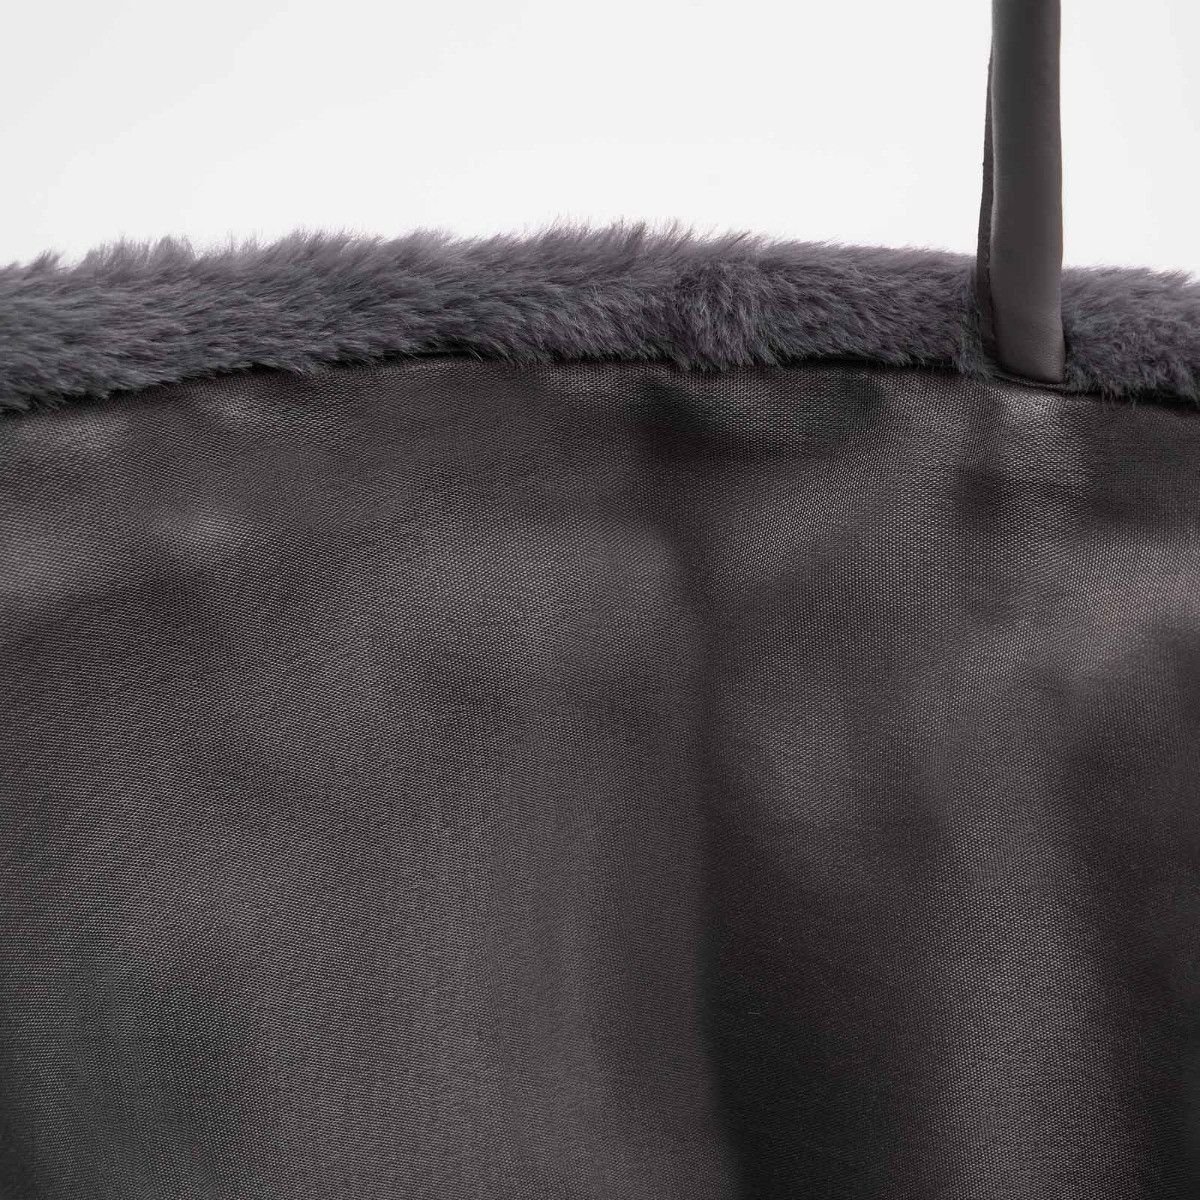 OHS Faux Fur Fleece Storage Basket - Grey>